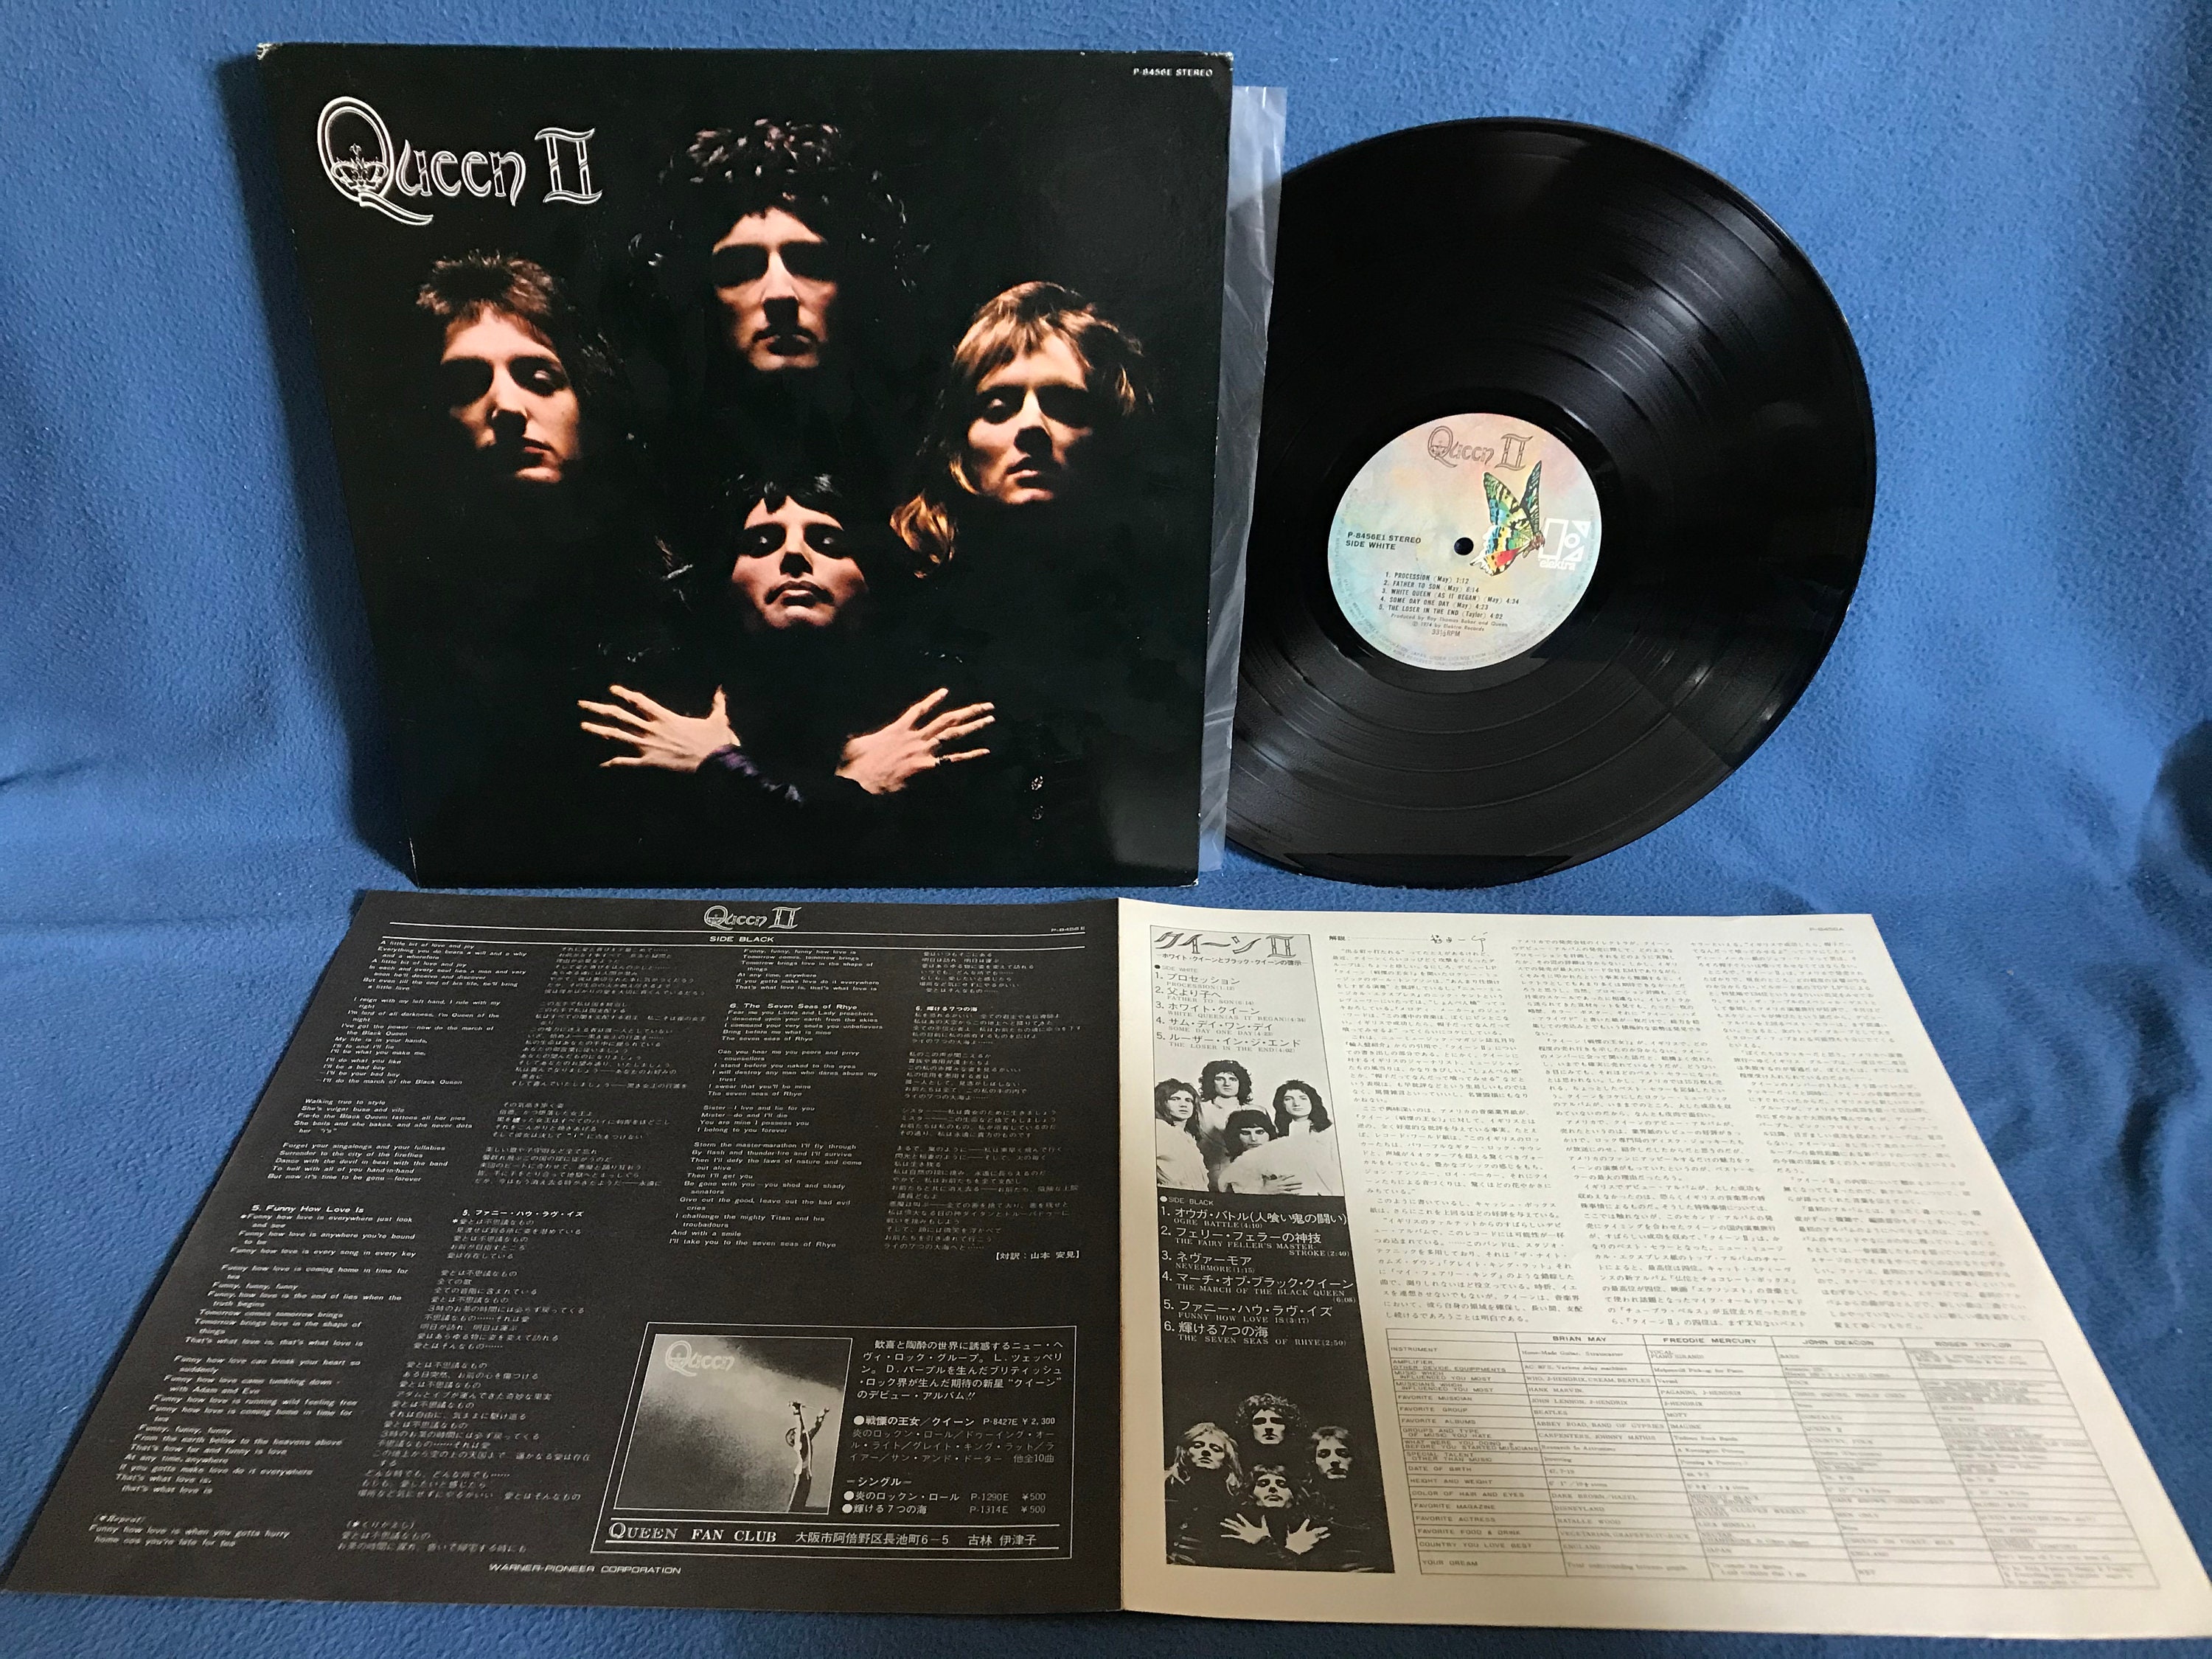 insulator knude Pålidelig RARE Vintage Queen ii Vinyl Lp Record Album - Etsy